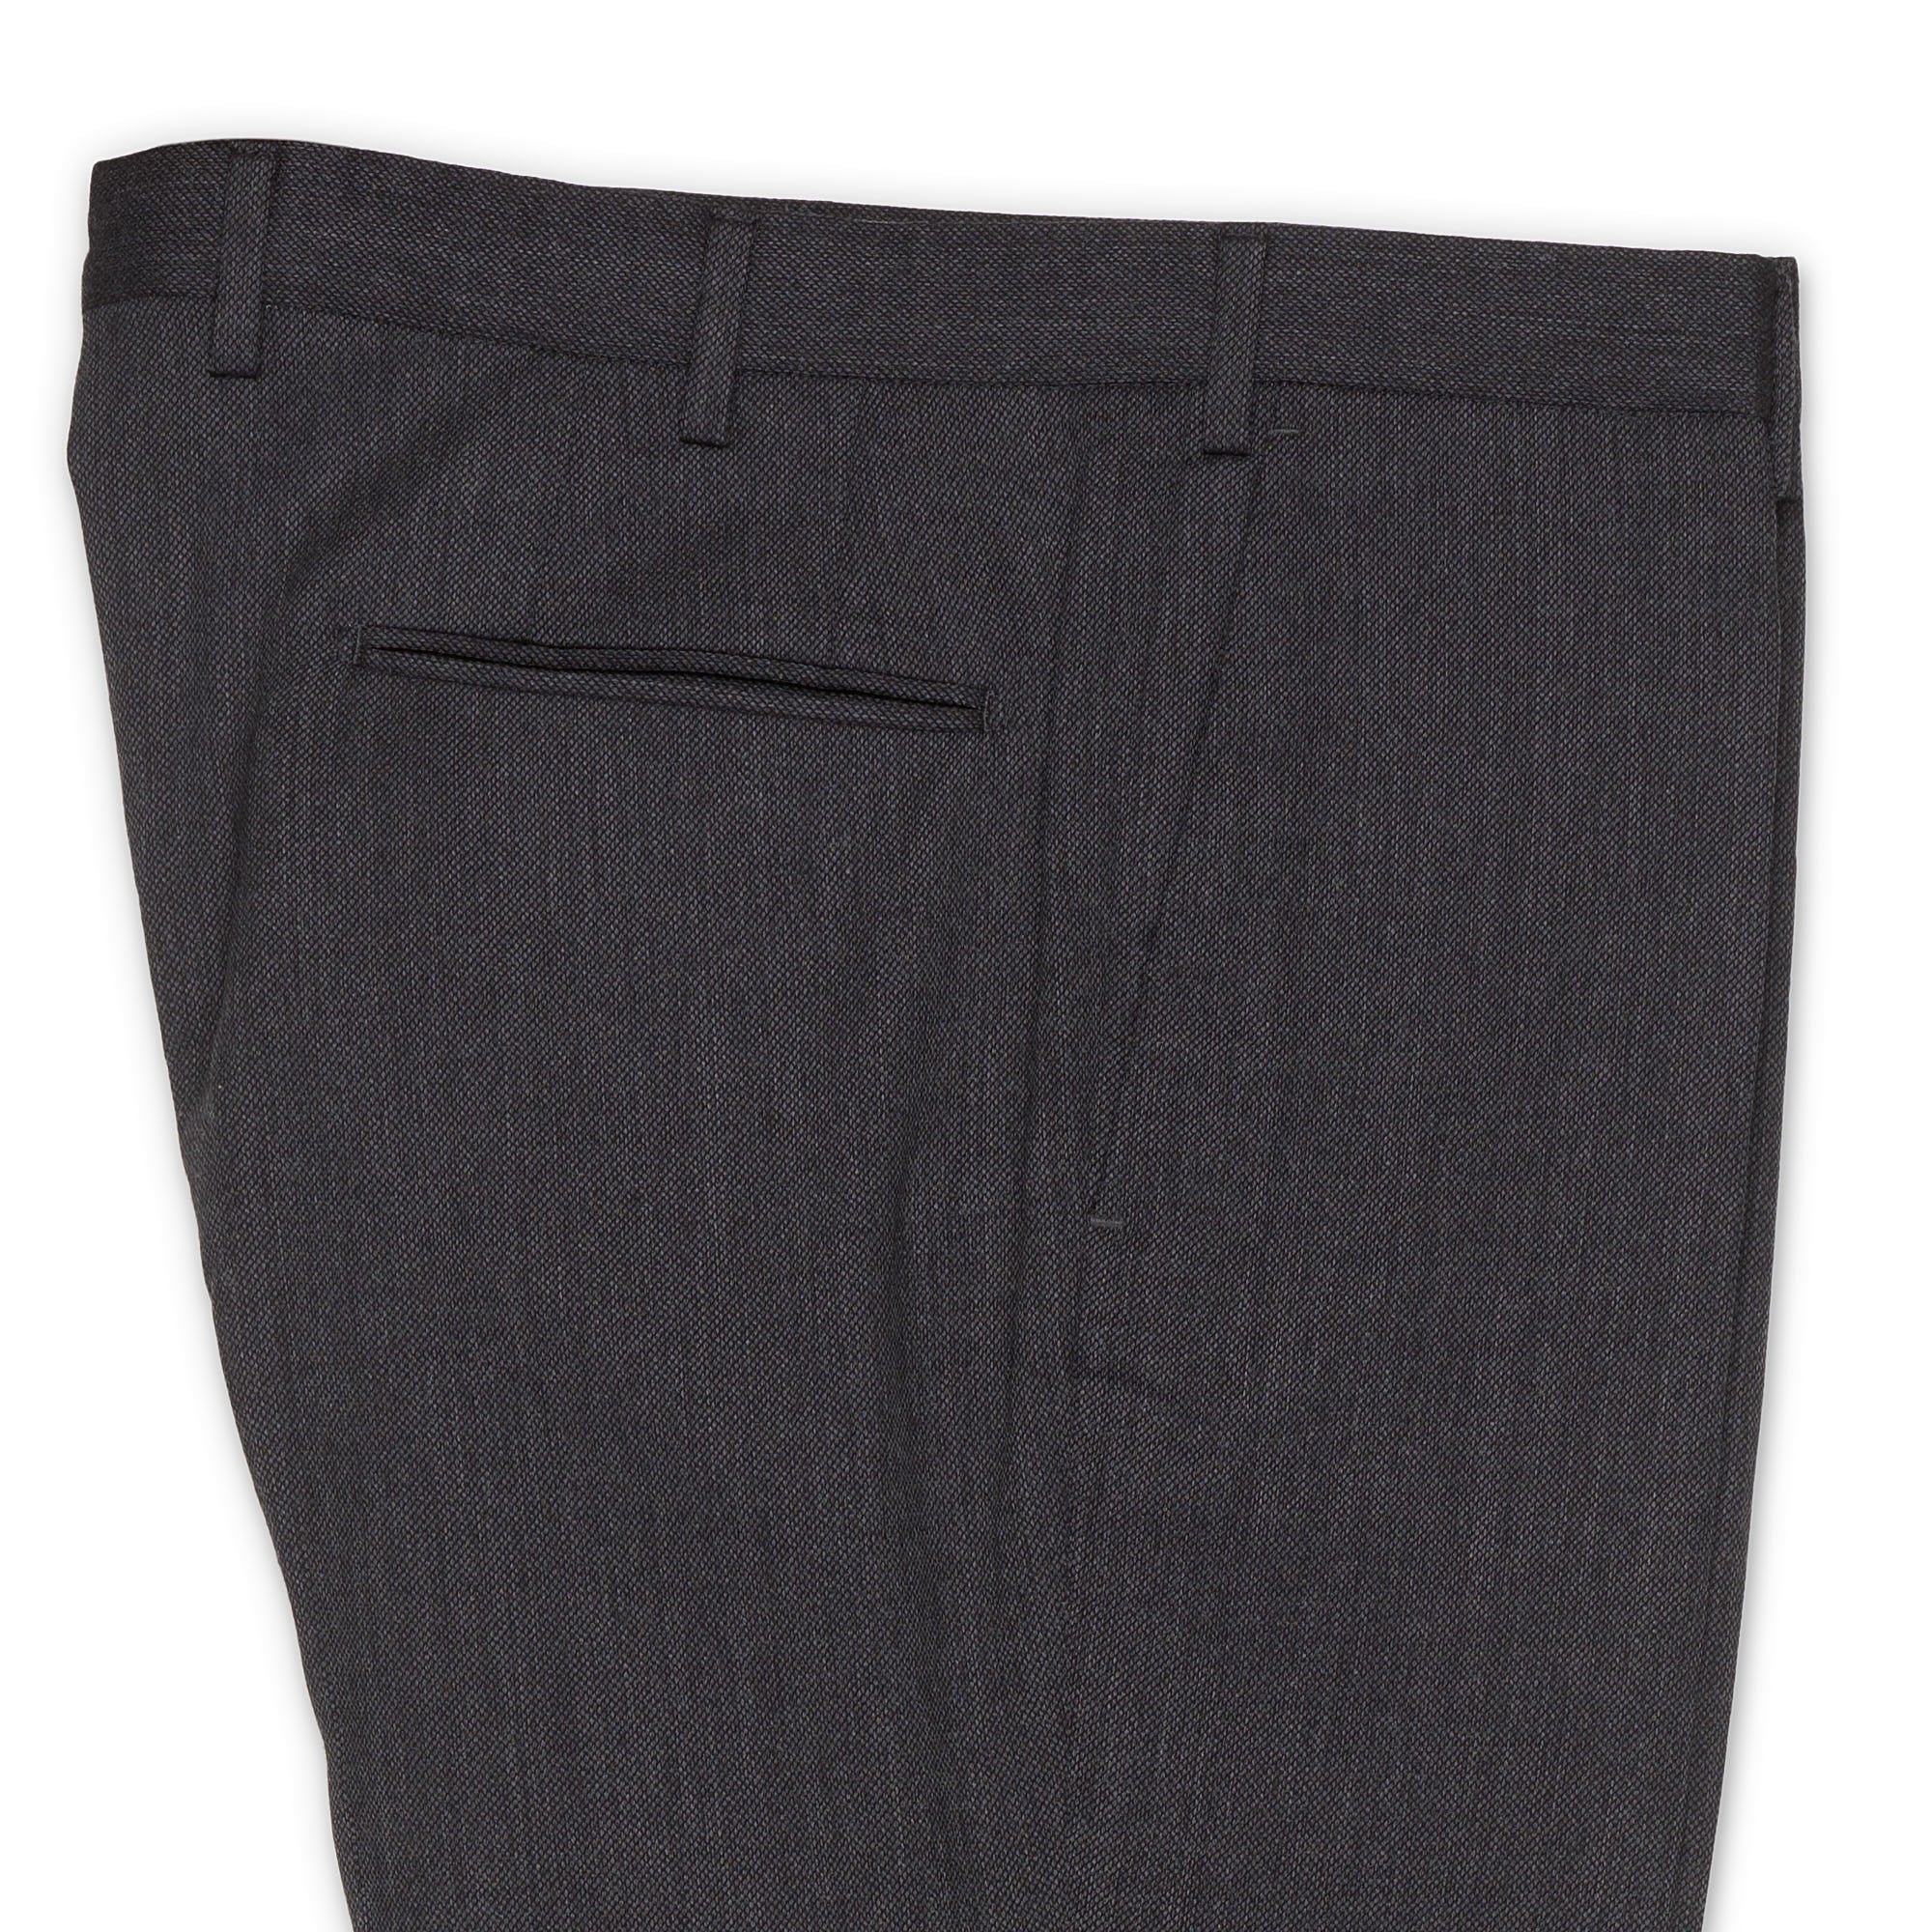 INCOTEX (Slowear) Gray Birdseye Wool Flat Front Dress Pants EU 54 NEW US 38 Slim INCOTEX